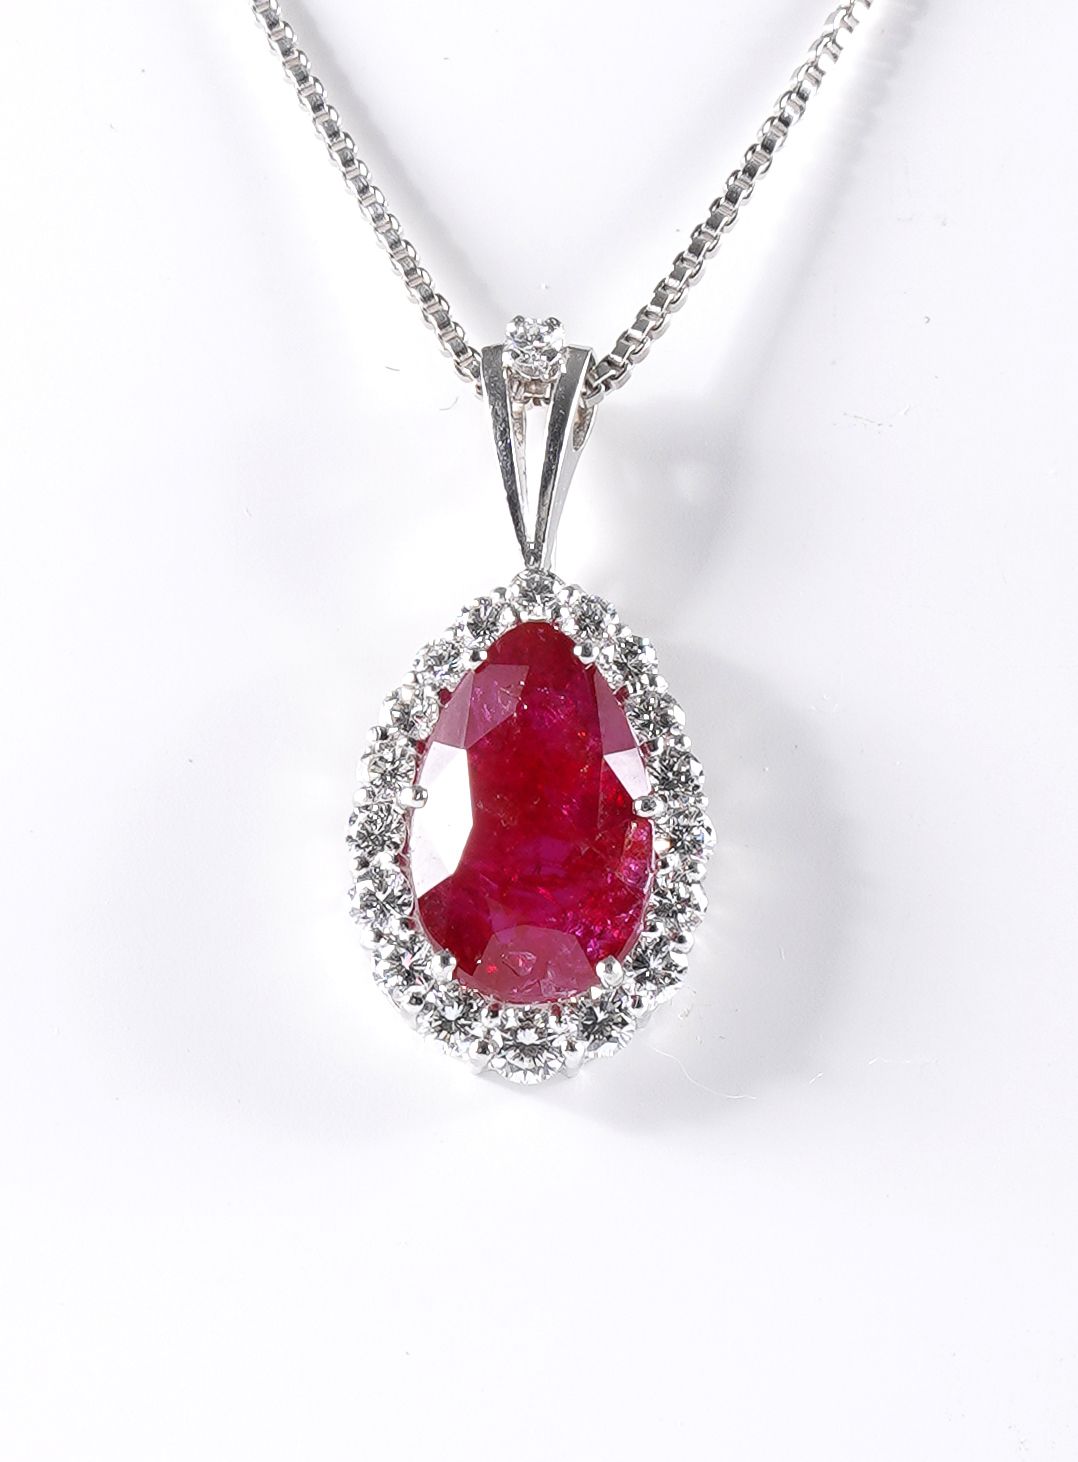 Collier Pendant in platinum, rubies and diamonds.